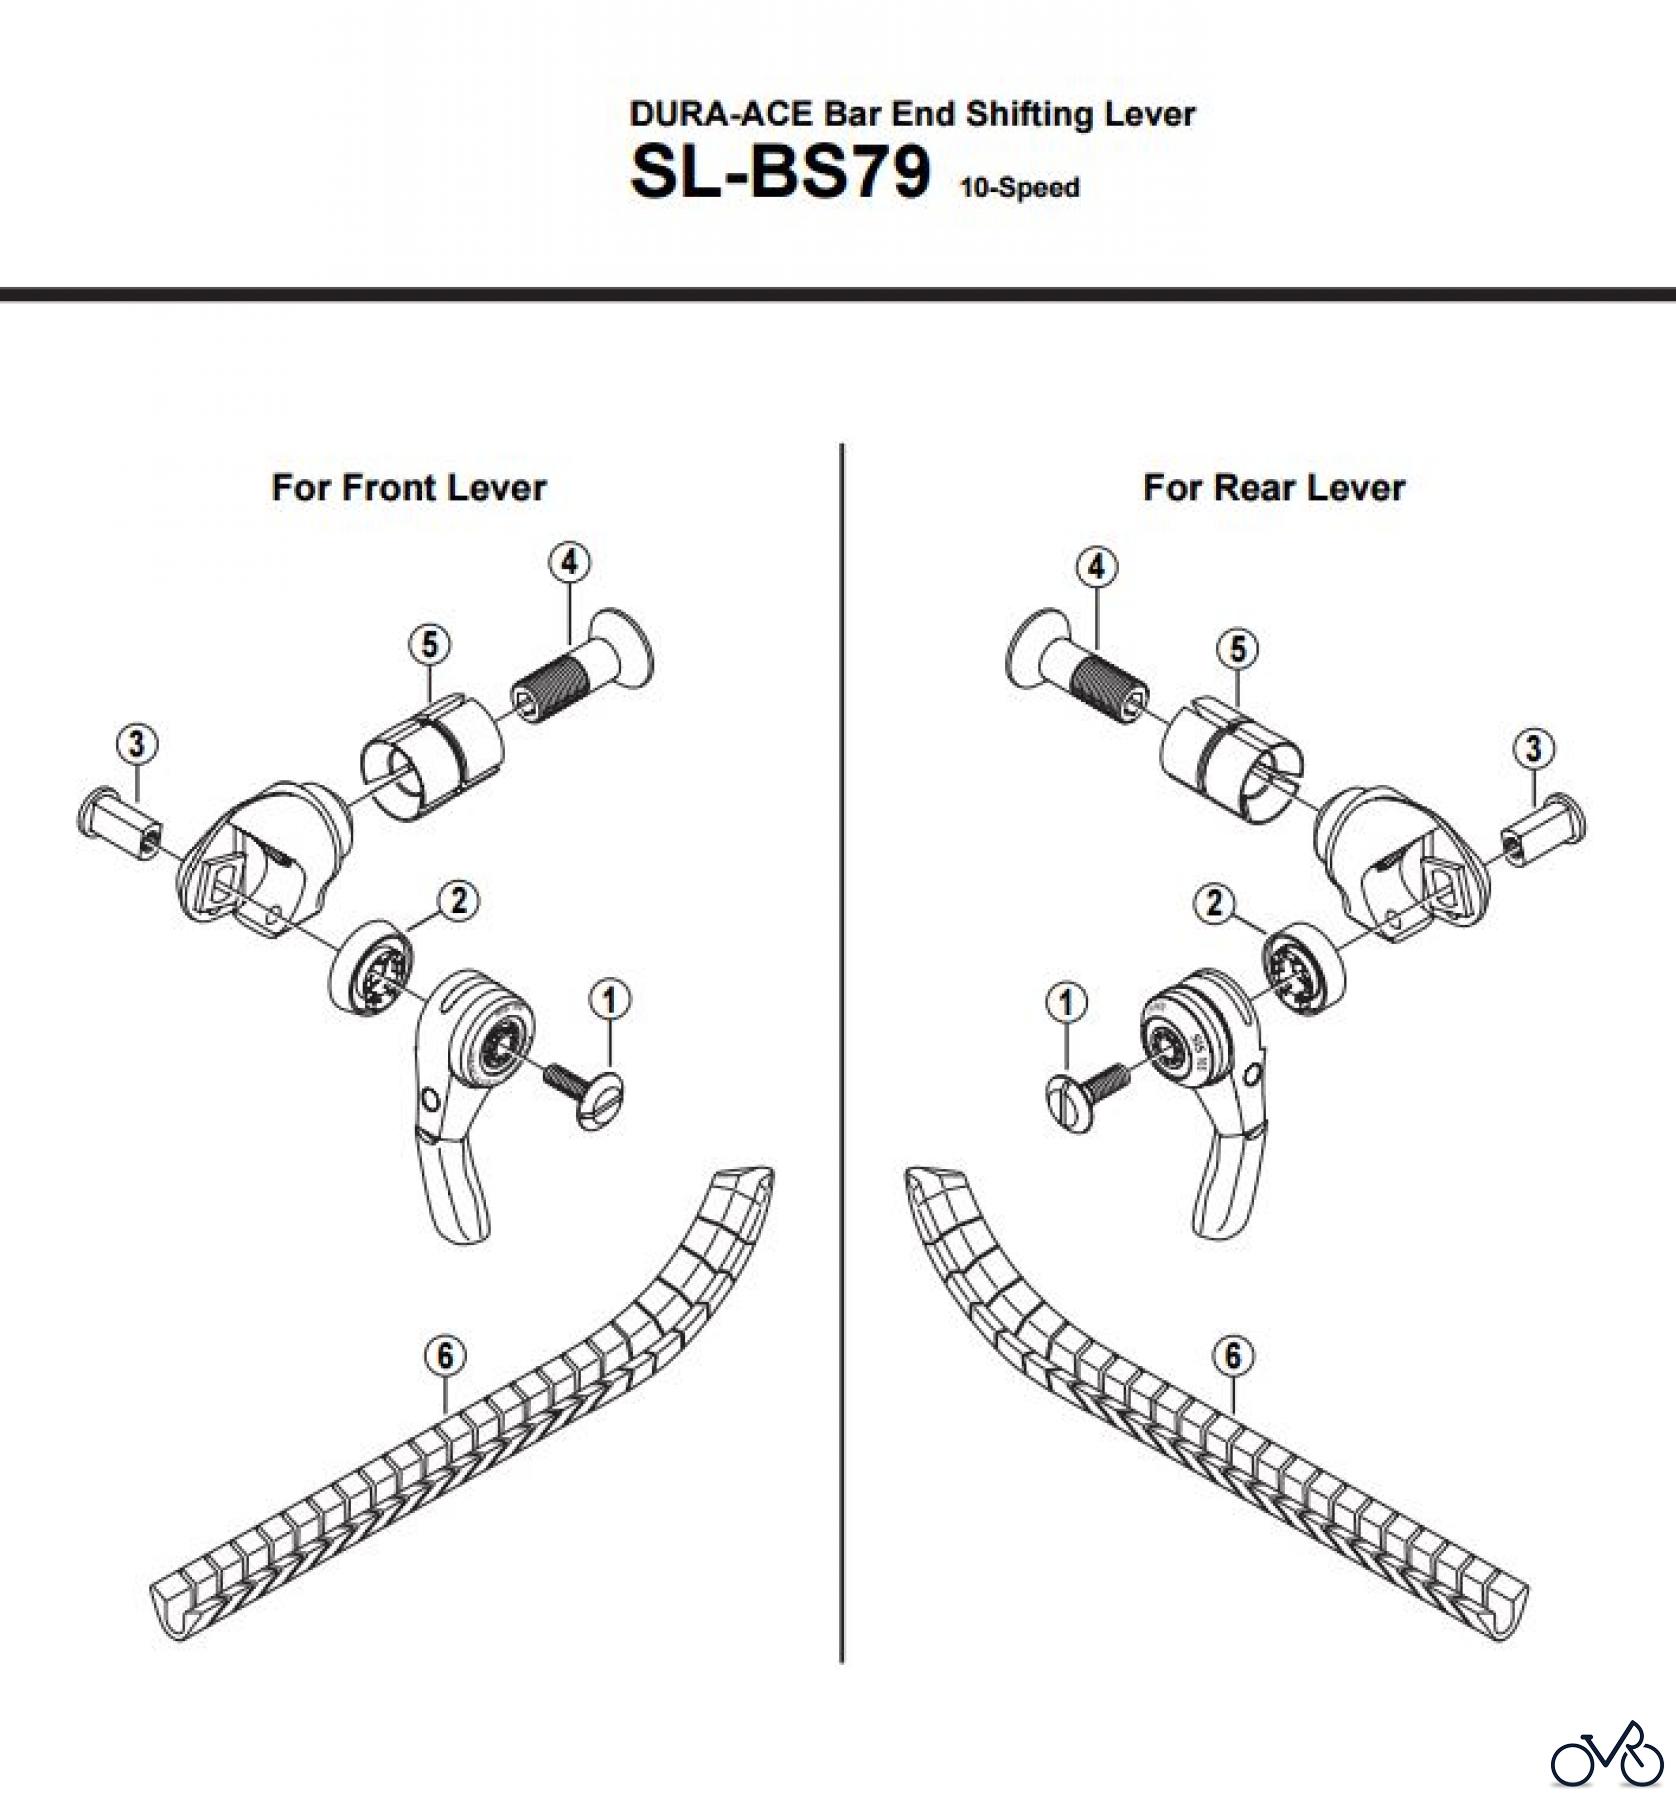  Shimano SL Shift Lever - Schalthebel SL-BS79  DURA-ACE Bar End Shifting Lever